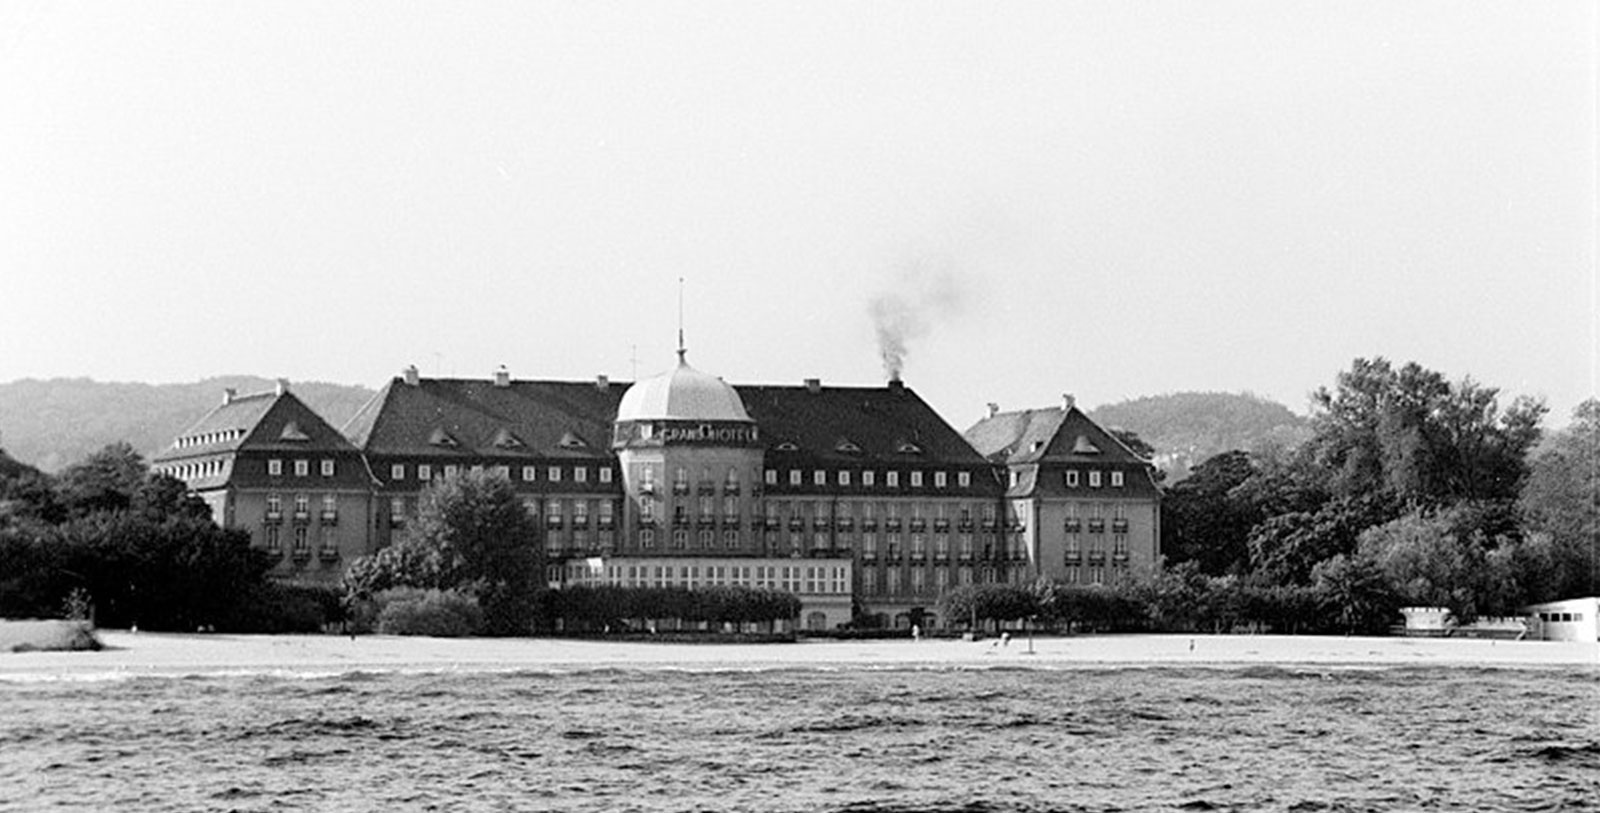 Historic Image of Hotel Façade Sofitel Grand Sopot, 1927, Member of Historic Hotels Worldwide, in Sopot, Poland, History